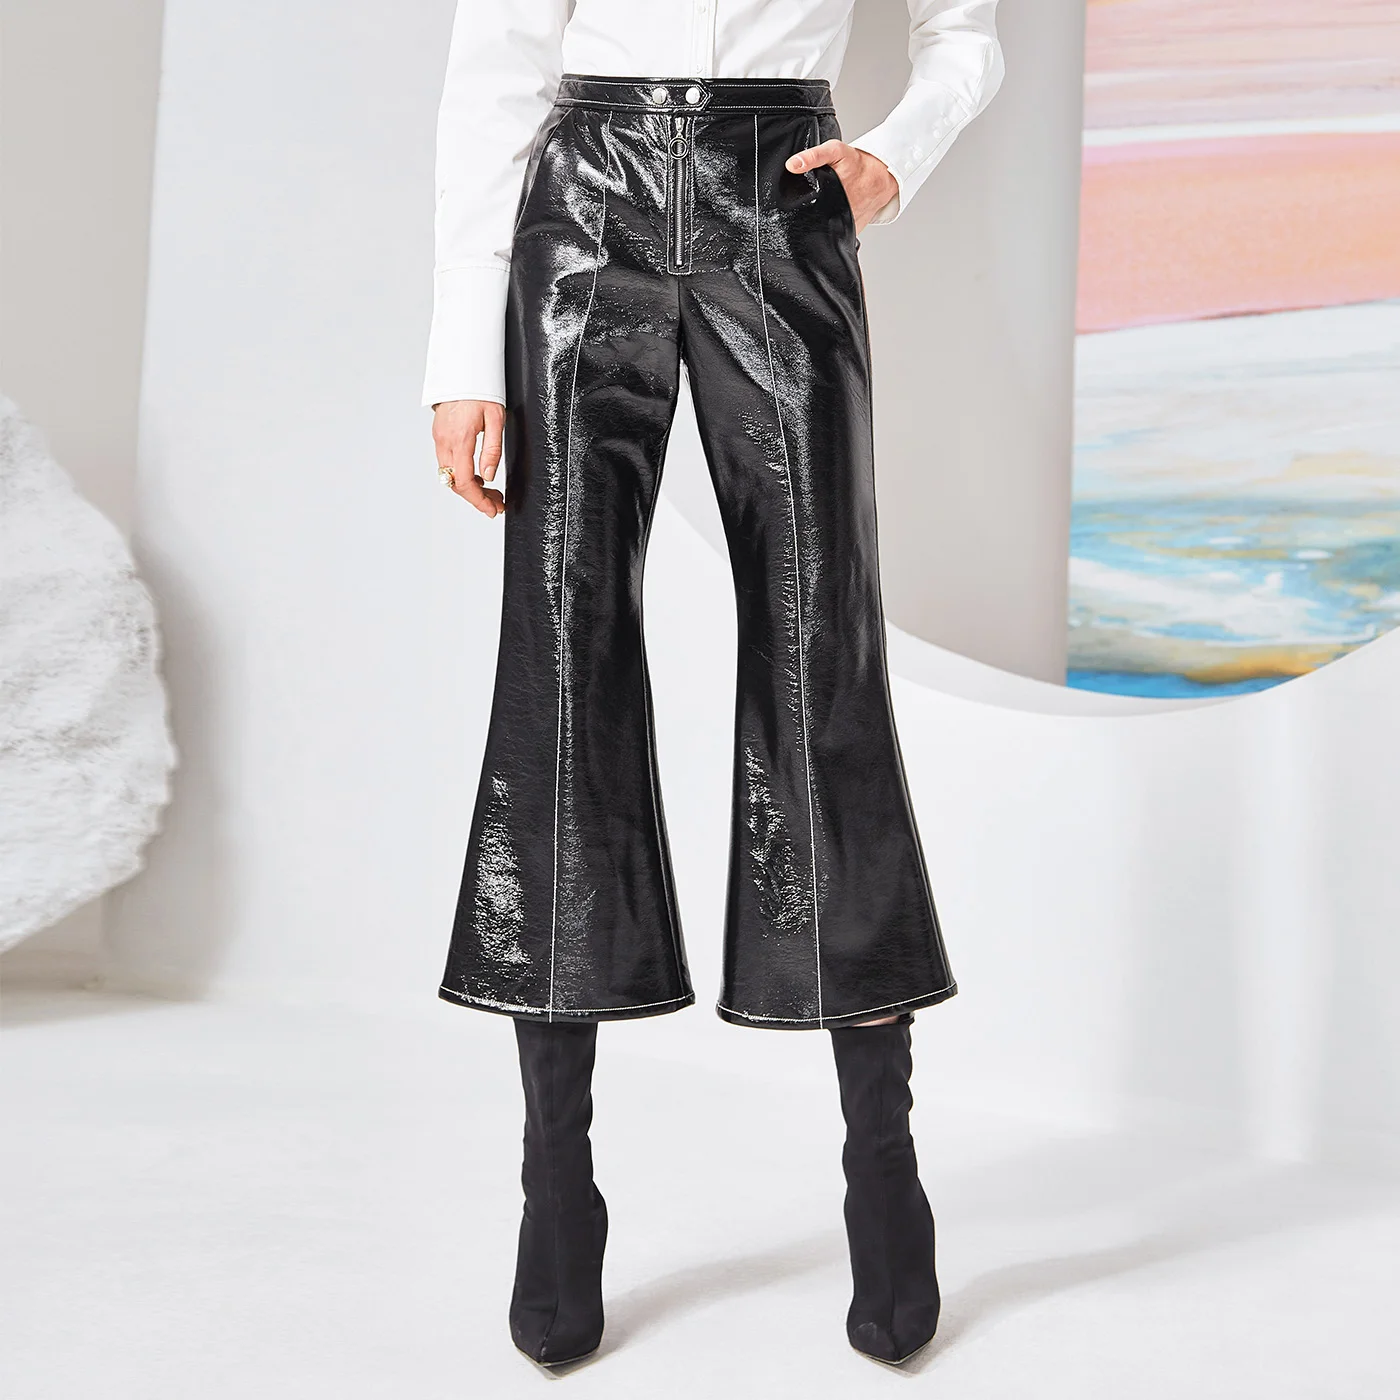 Fashion Shiny Leather Pants Glossy Fabric PU leather pants female high waist punk hip bag patent leather trousers wq439 dropship